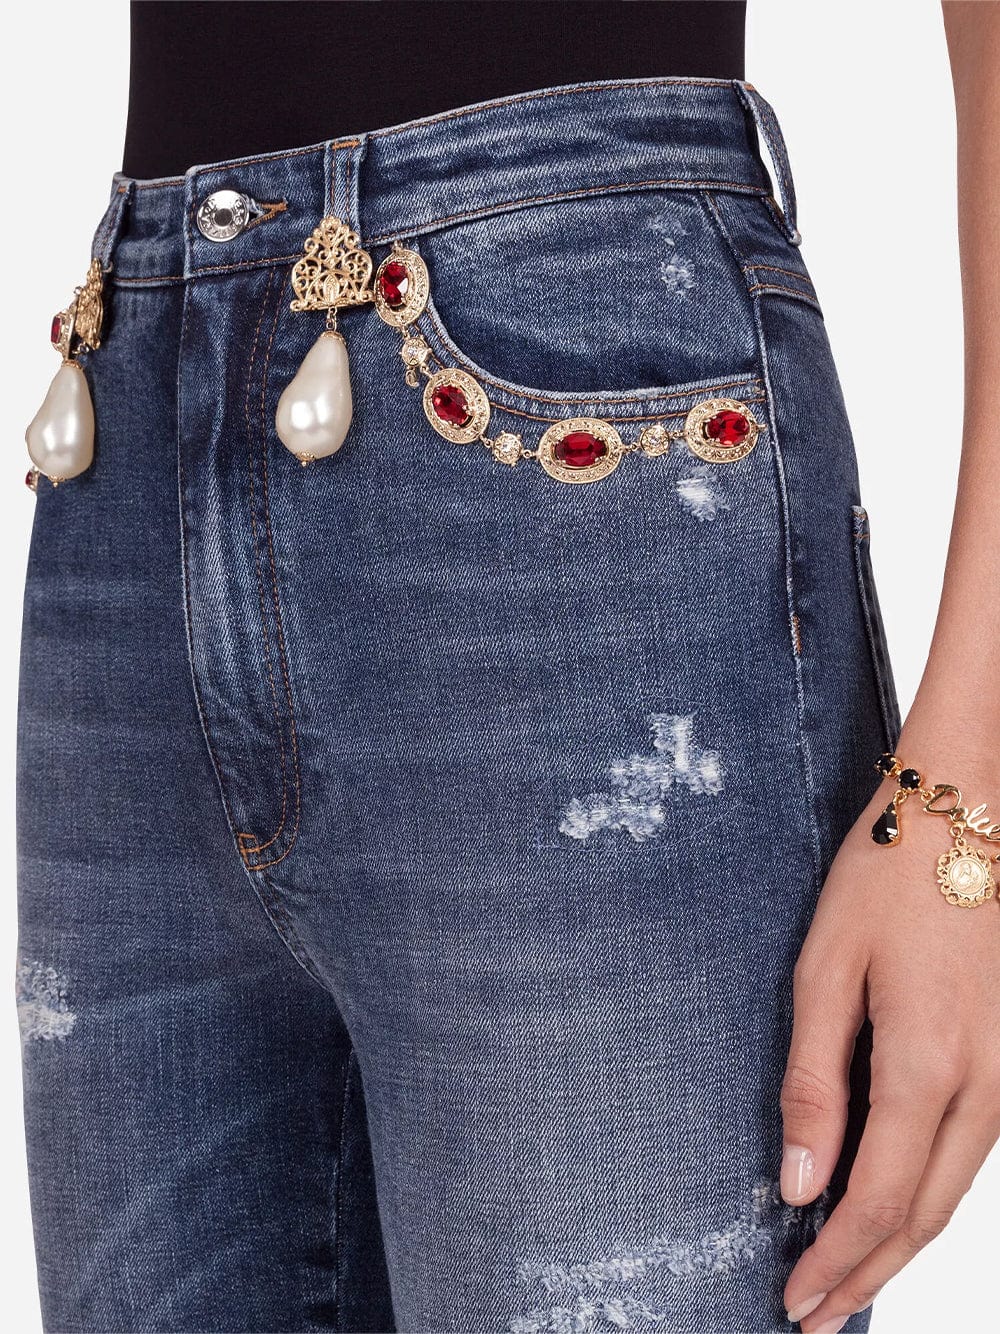 Dolce & Gabbana Pearls Embellished Jeans